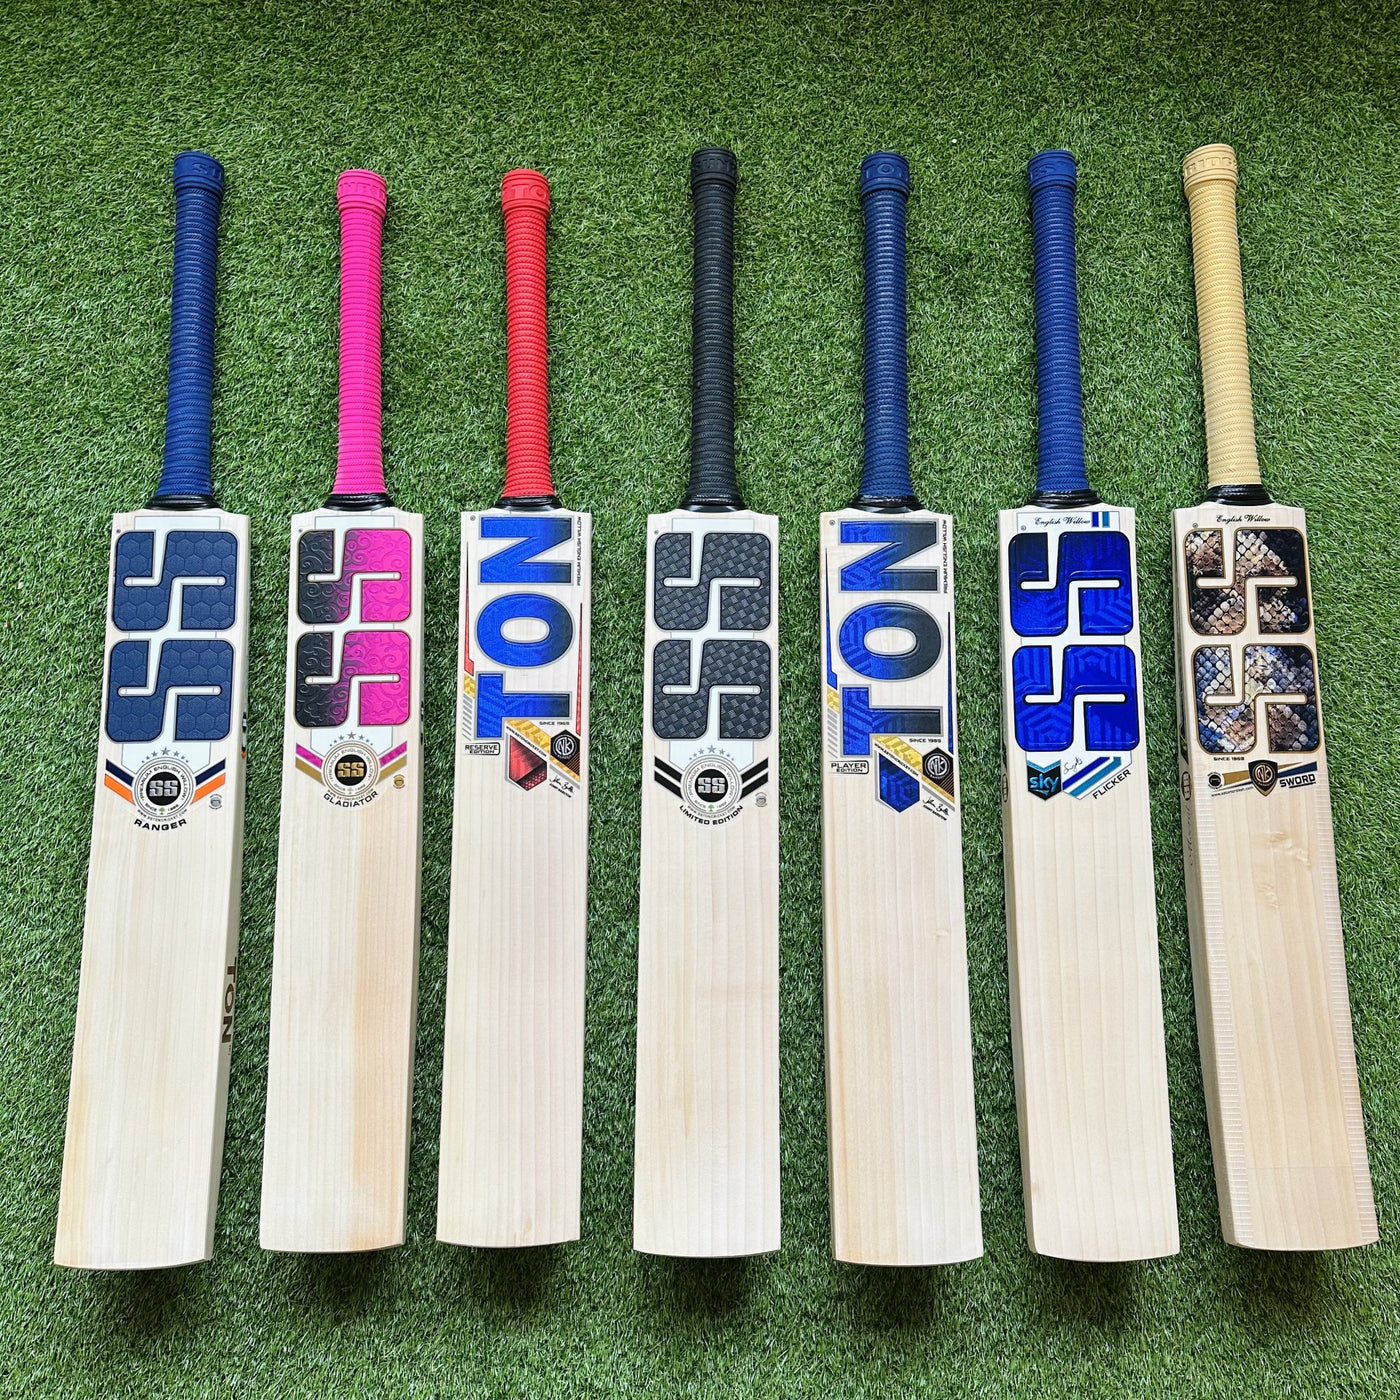 DKP Cricket Equipment Sale | Best Cricket Gear | Shop Now | Cricket Bat Sale | DKP Cricket Bats | Up to 50% off on Cricket Equipment 